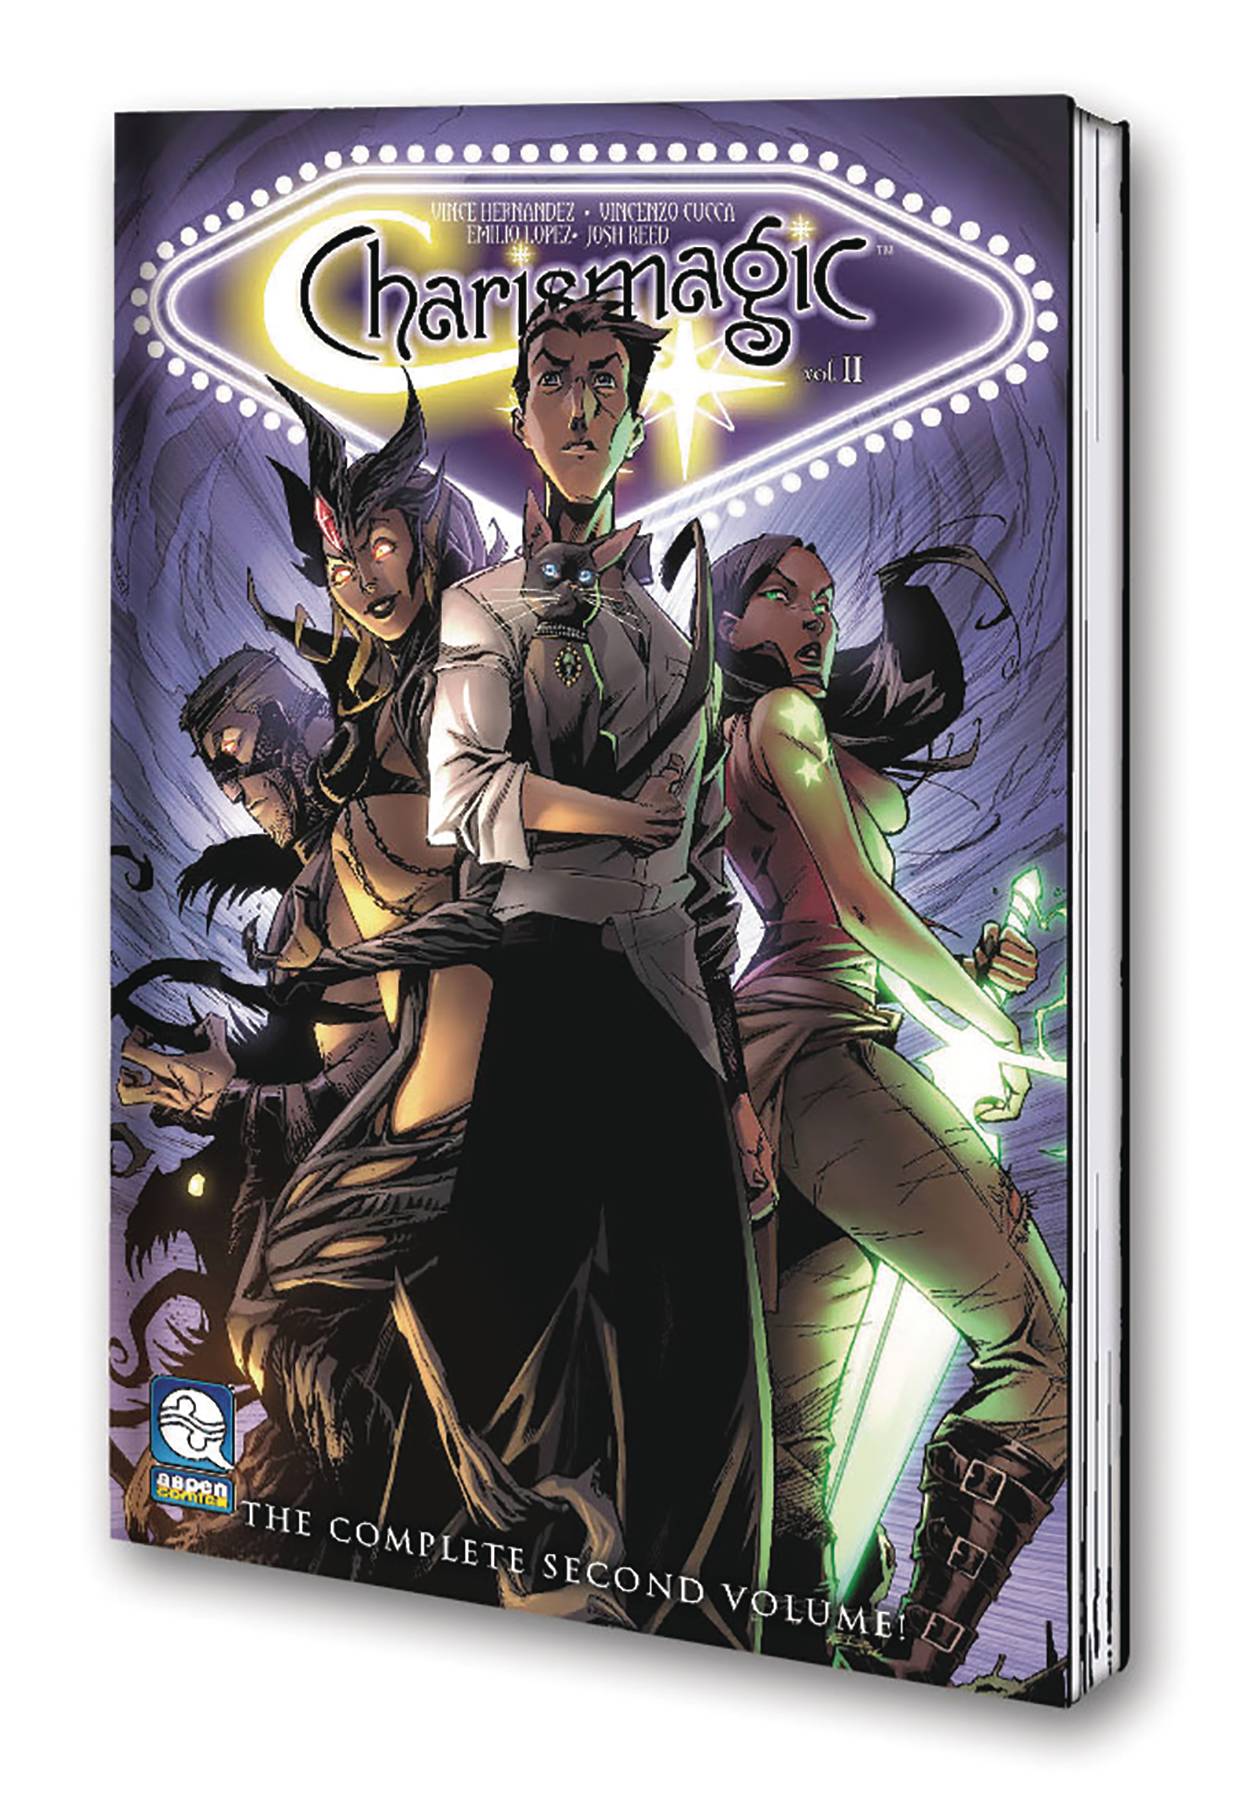 Charismagic Graphic Novel Volume 2 Golden Realm